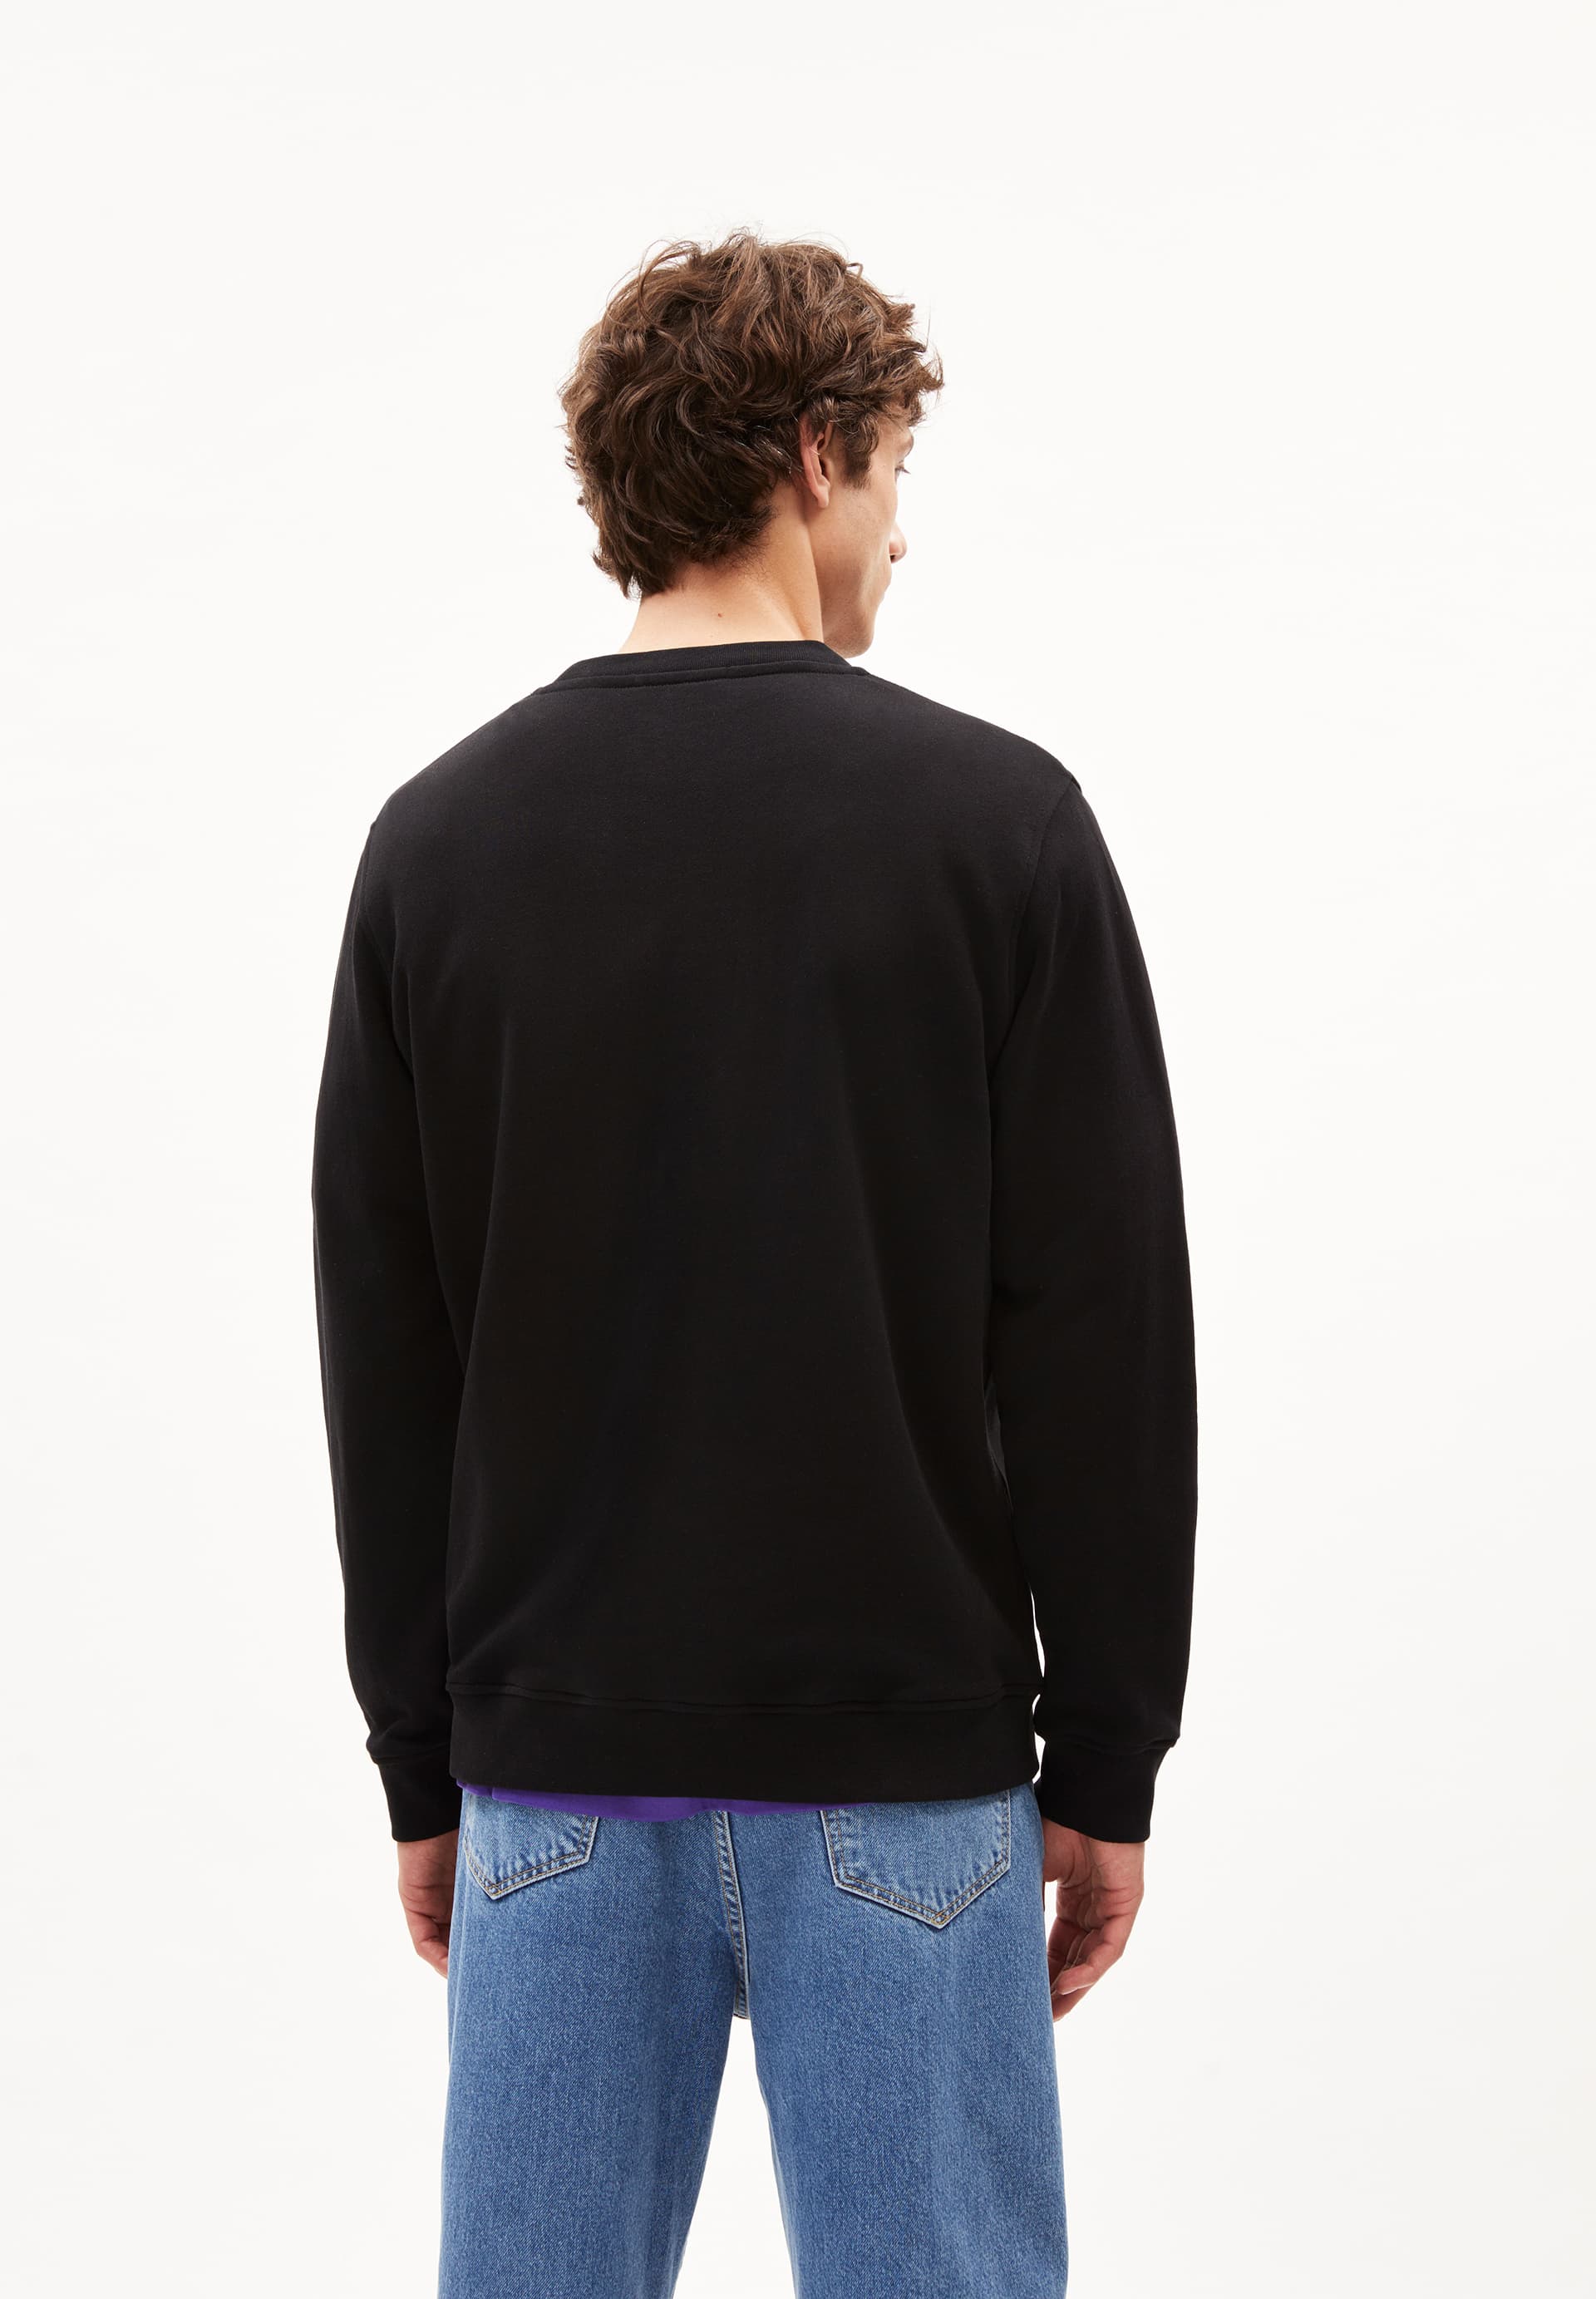 BAARO PIXXEL Sweatshirt Regular Fit made of Organic Cotton Mix